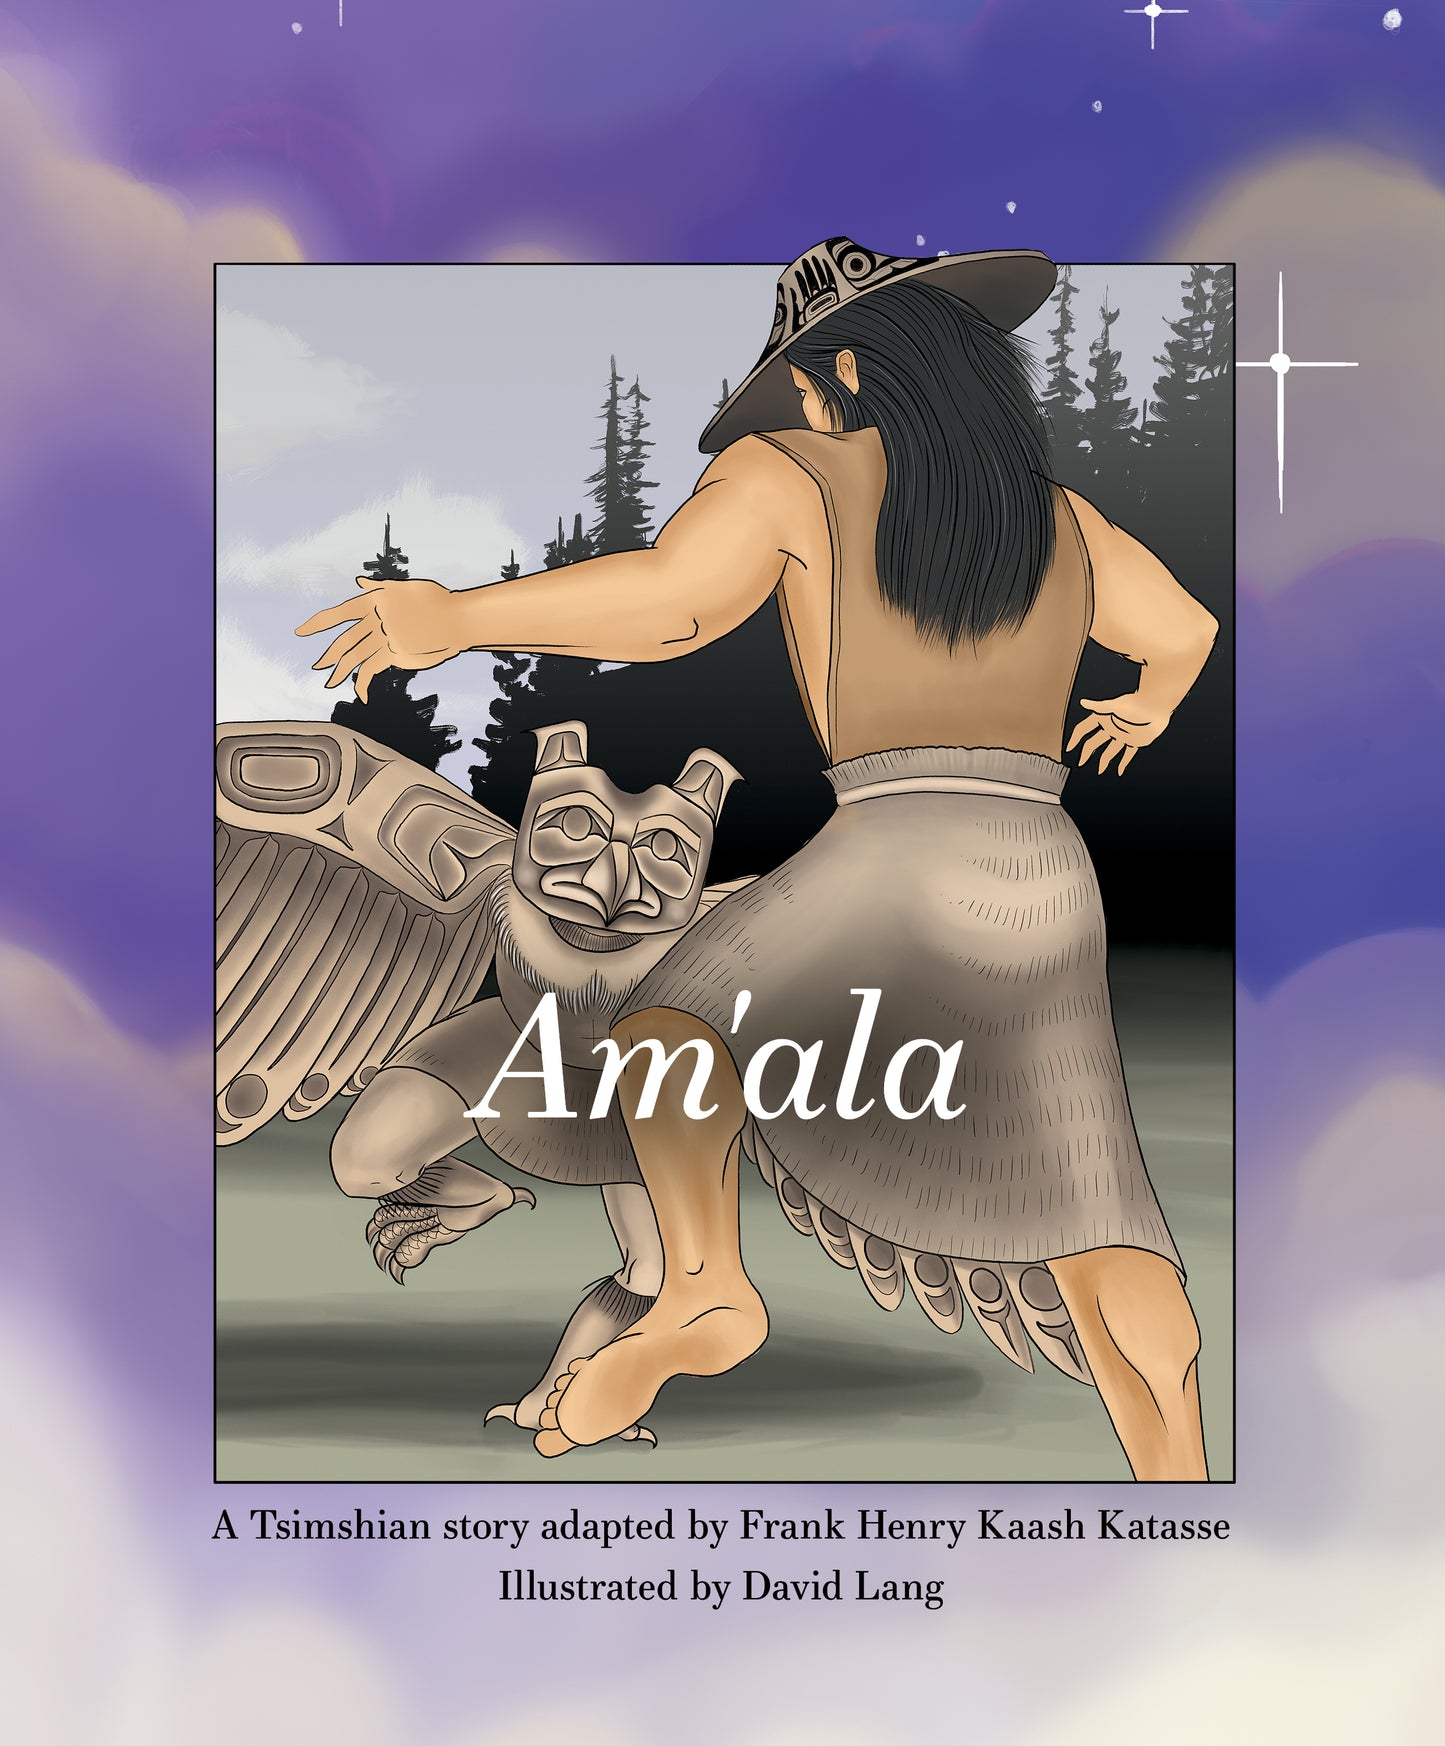 Book, BRR - “Am'ala", Katasse, Lang